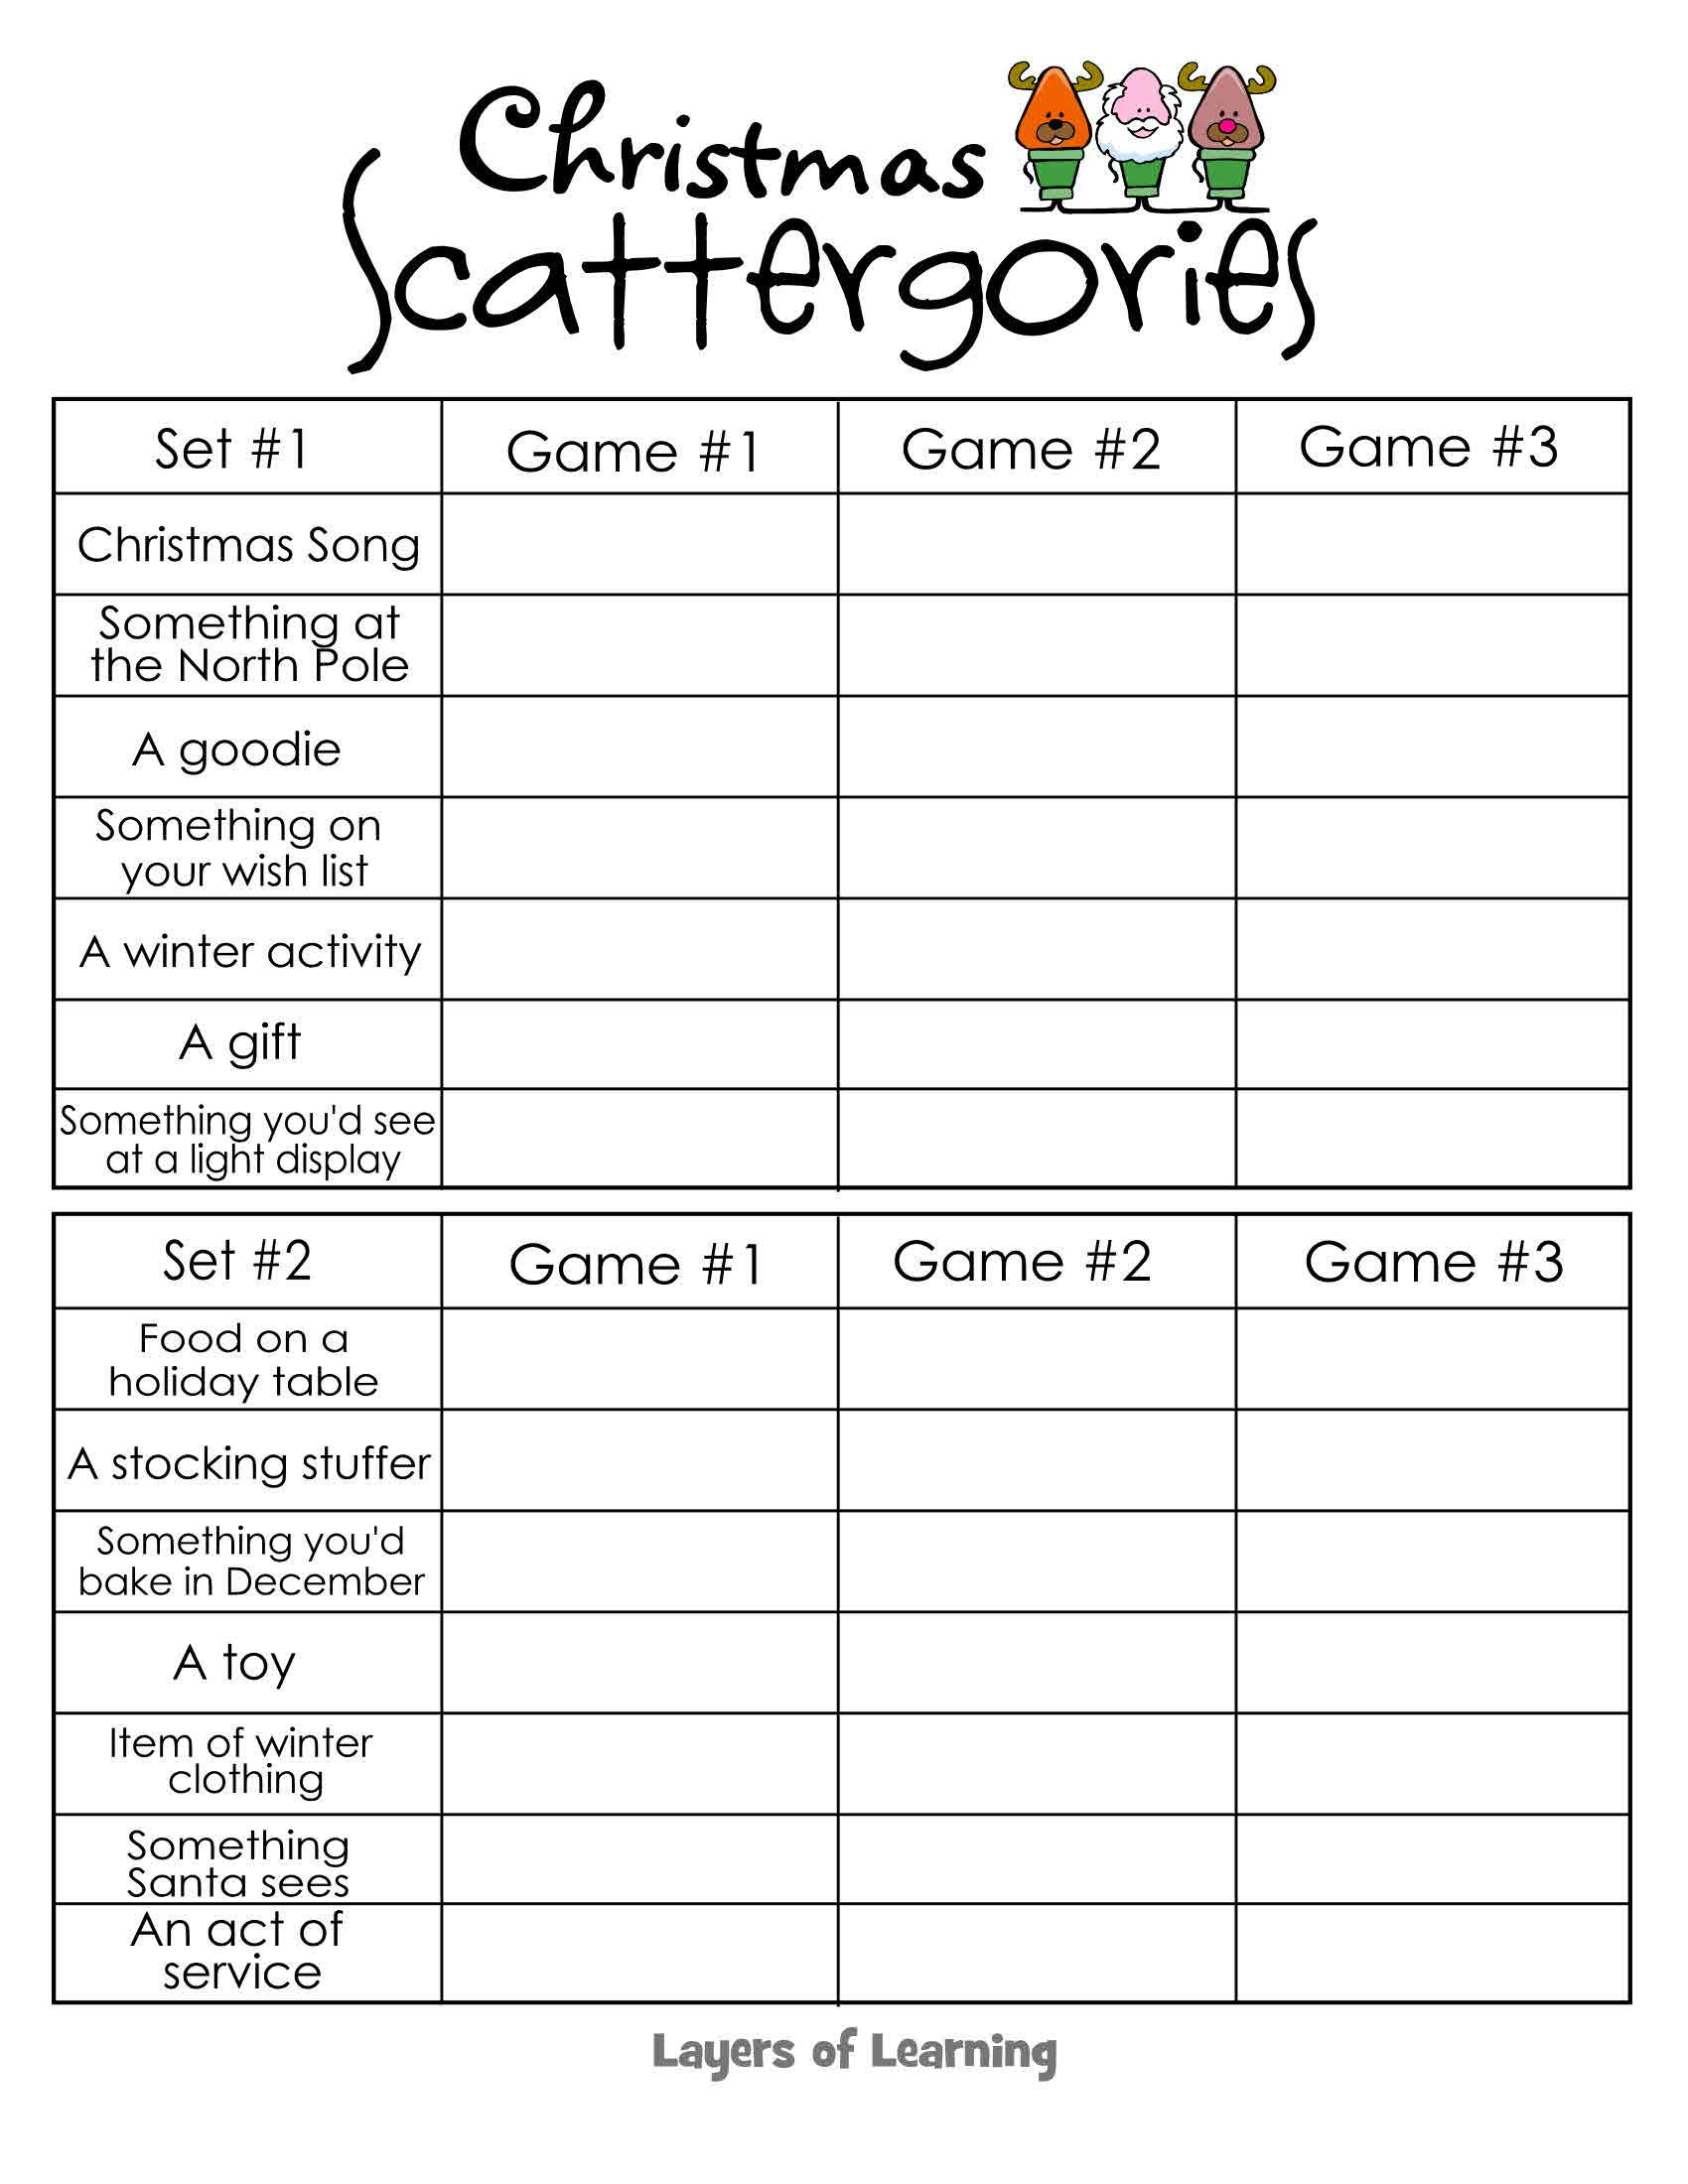 Christmas Scattergories | Kids Christmas Games | Pinterest - Free Printable Christmas Games For Preschoolers